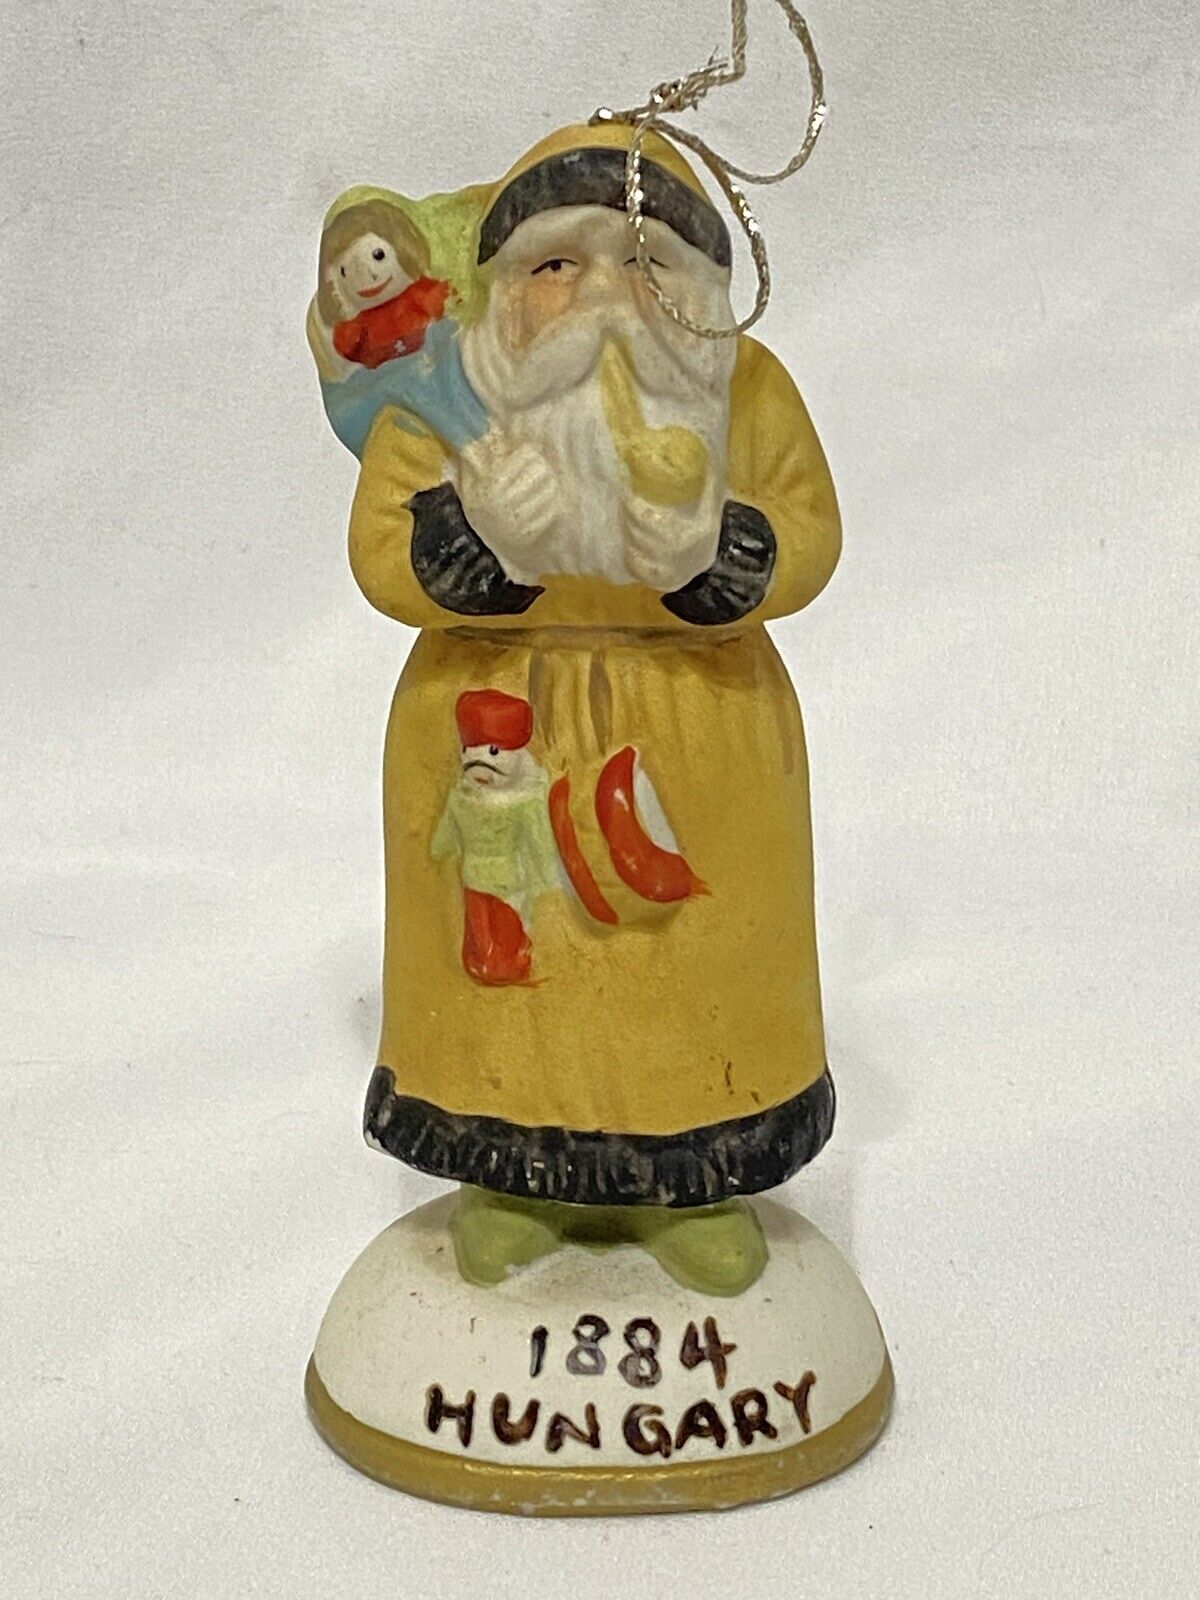 Vintage - 5.5” Santa Claus Hungary 1884 Christmas Figurine Holiday